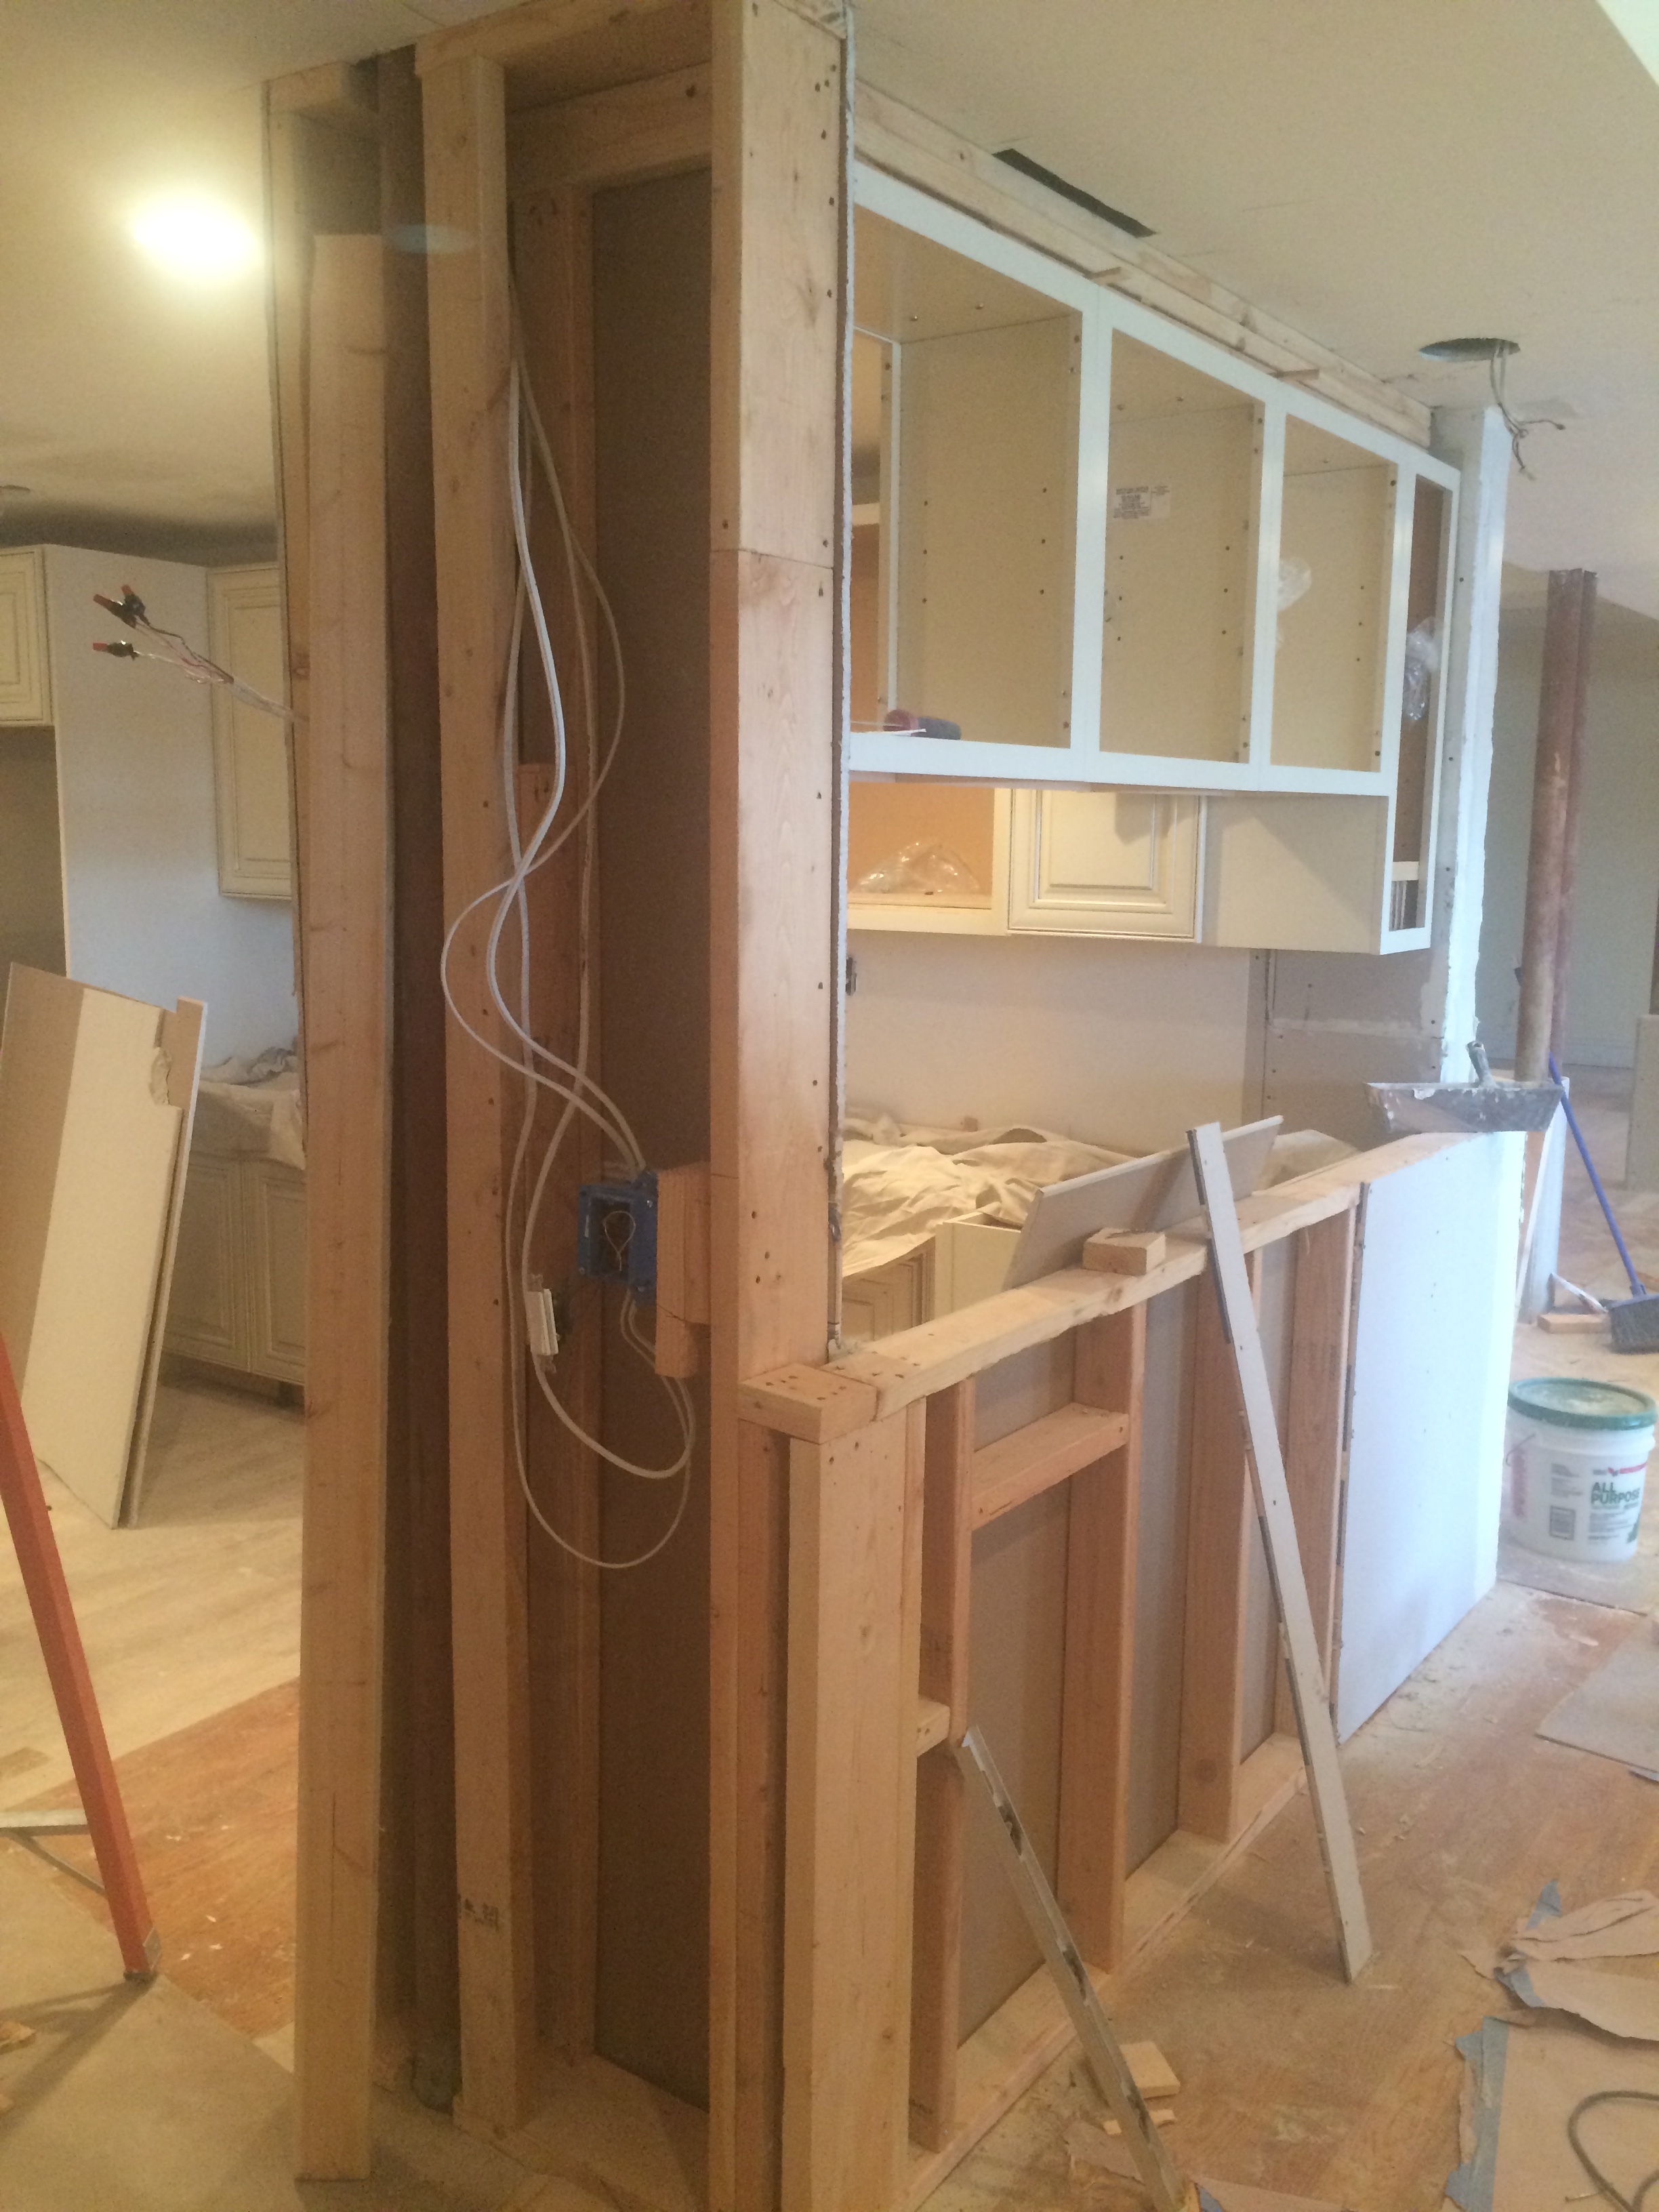 Kitchen Wall & Cabinets @ Residence (Peach Lake, NY)